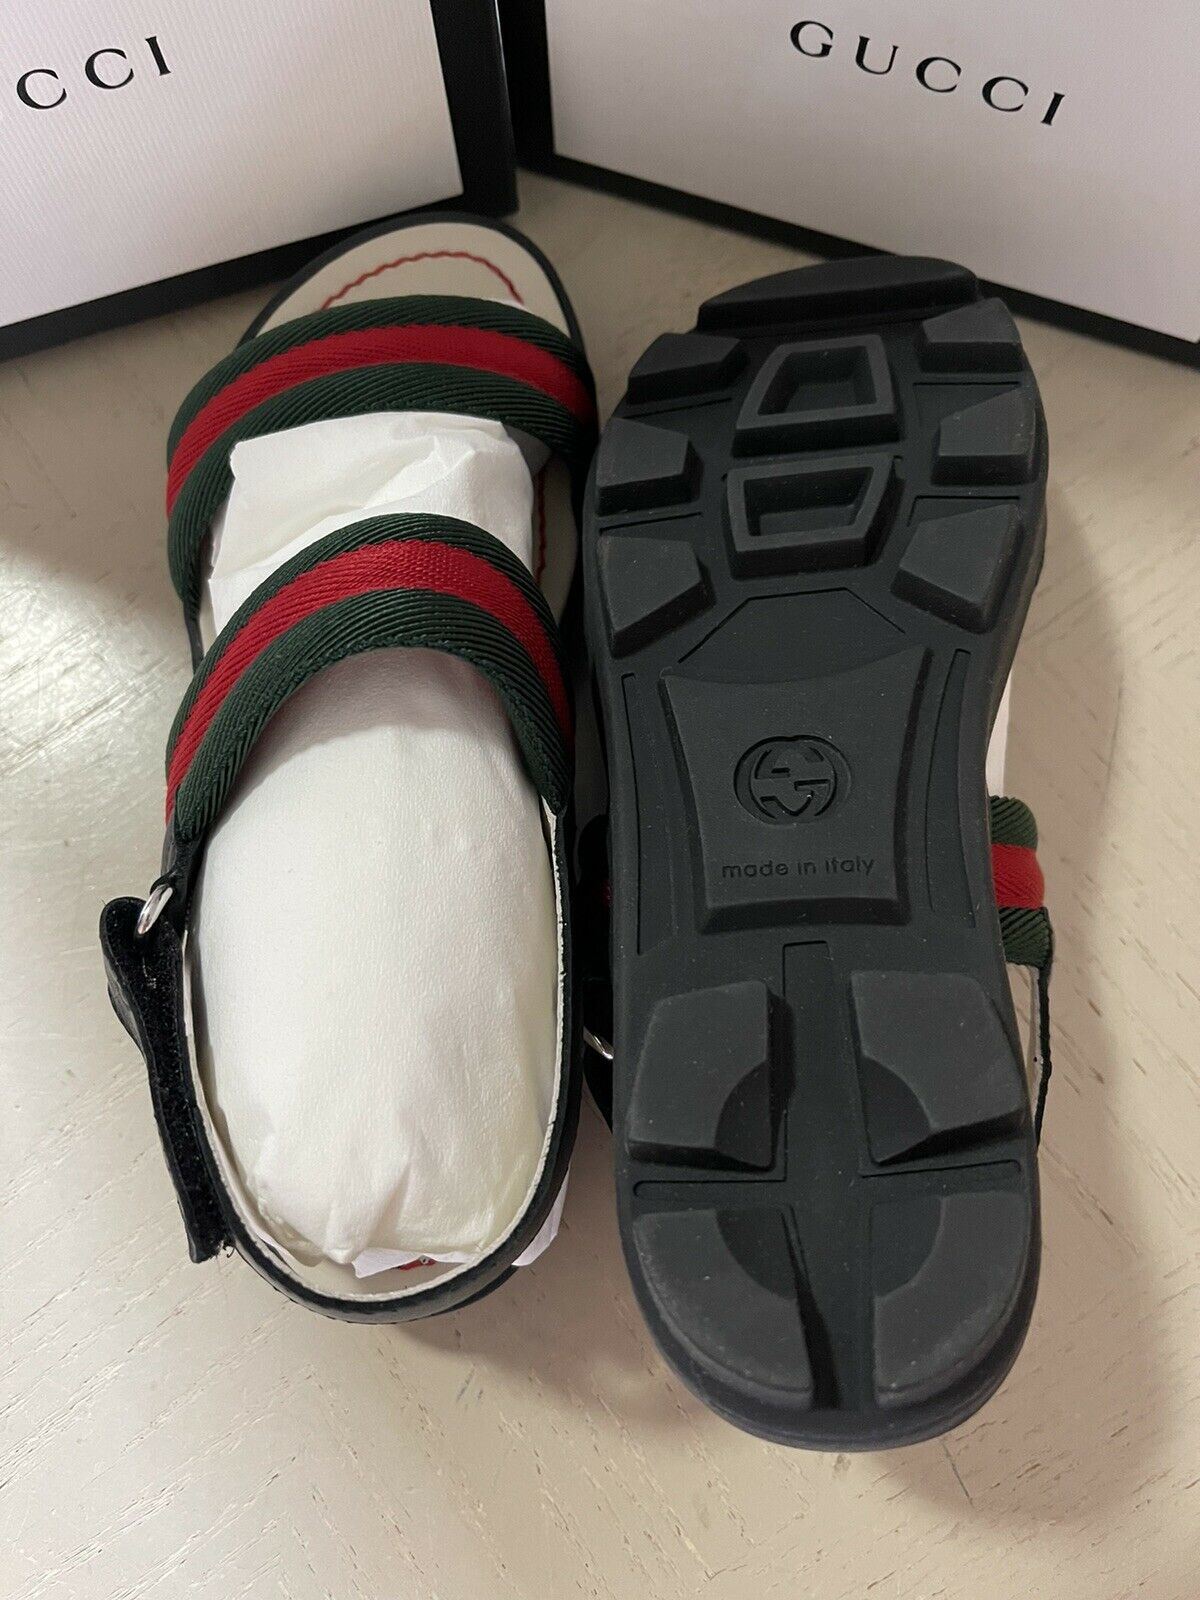 NIB Gucci Kids Canvas/Leather Sandal Shoes Black/Red Size 31/13US Age 6.5